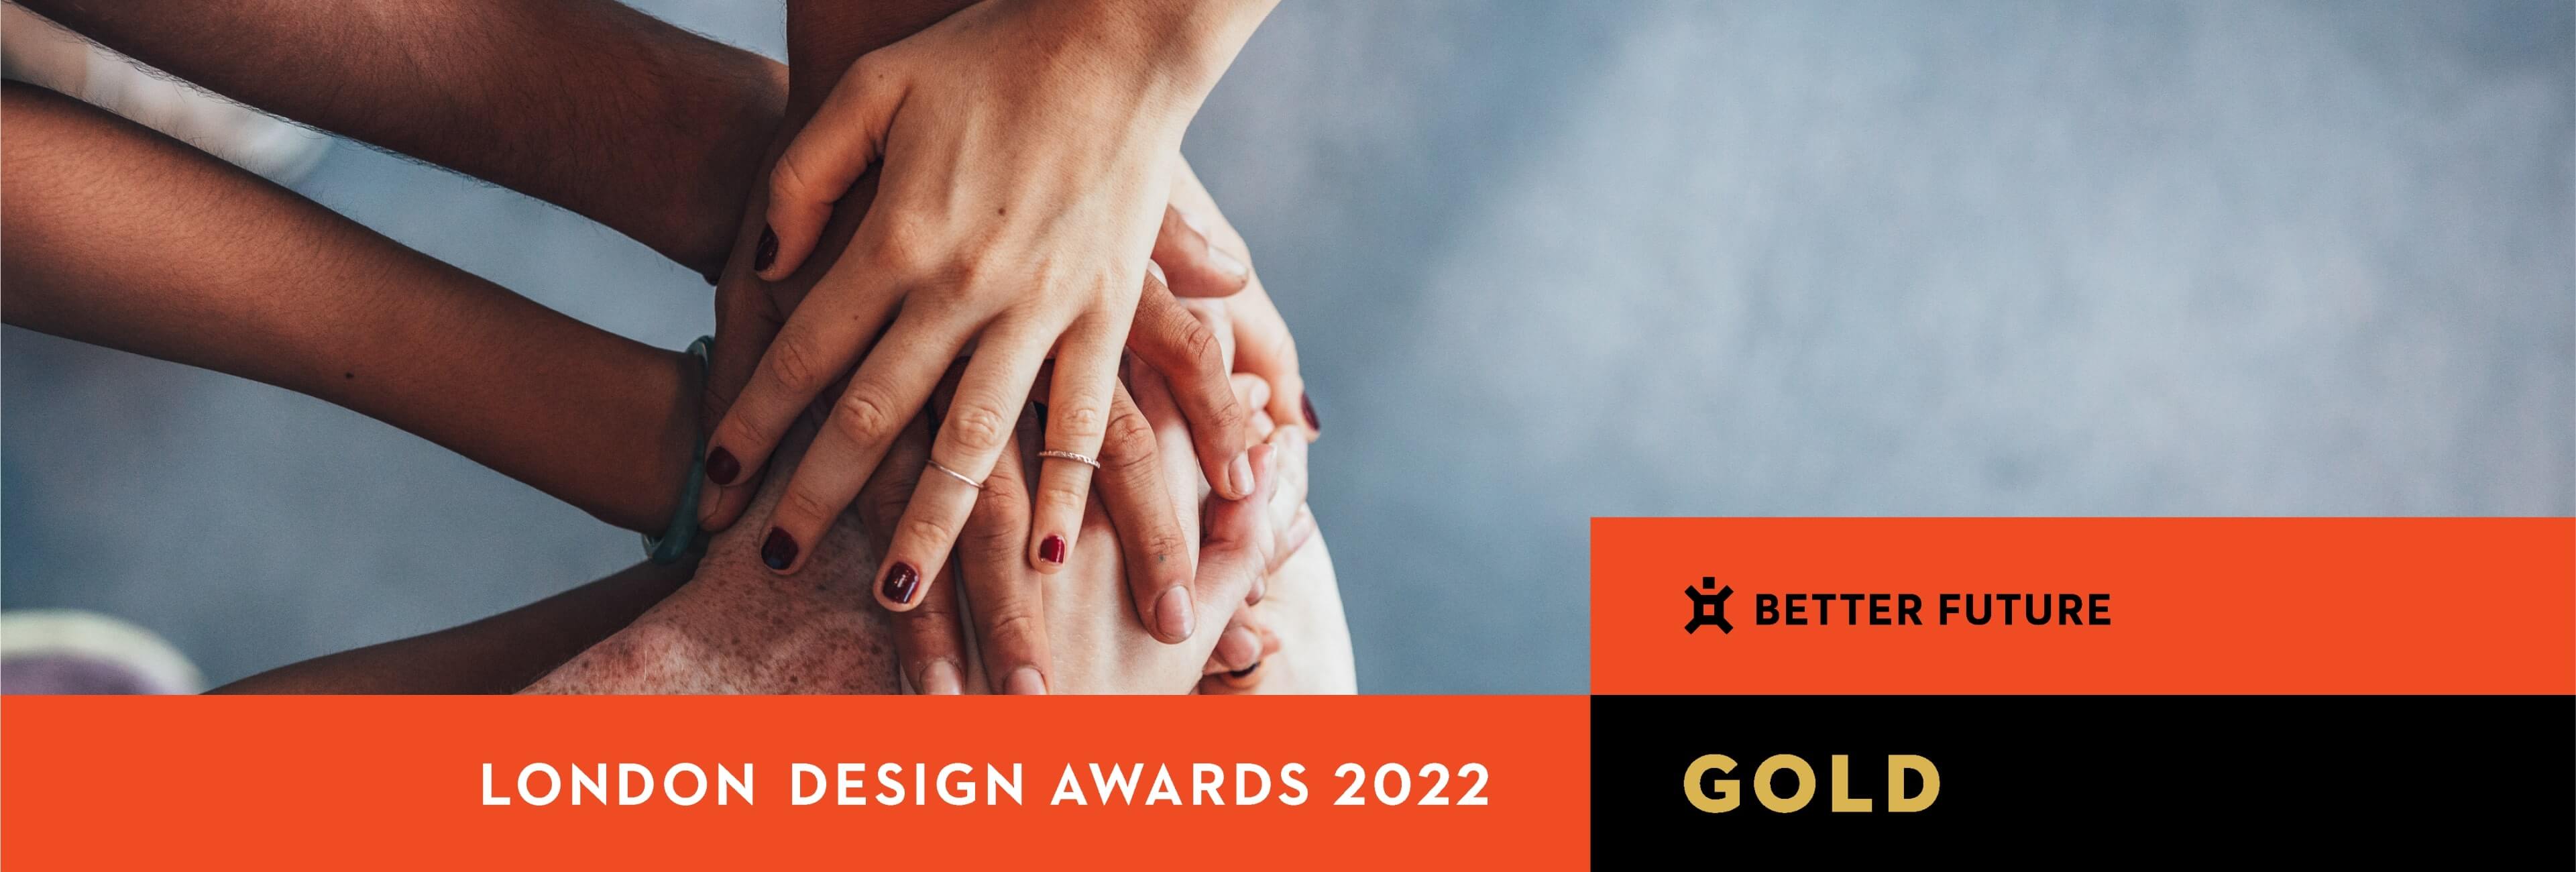 London Design Awards 2022